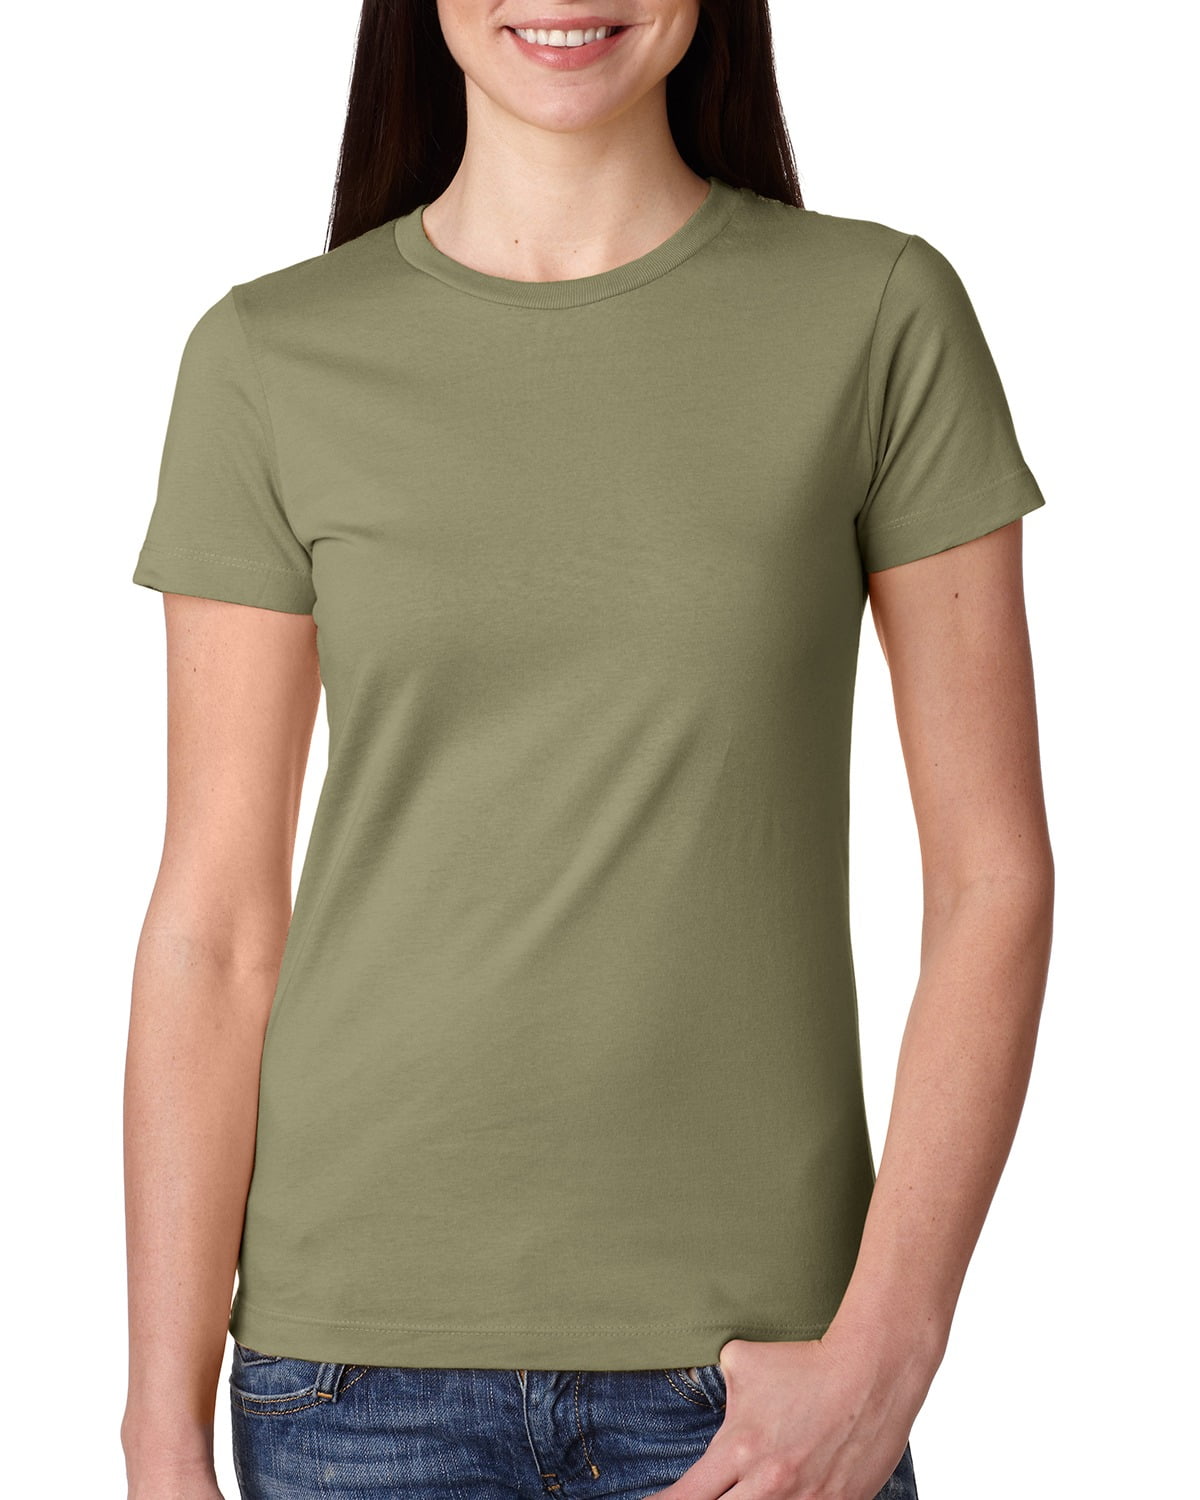 The Next Level Ladies Boyfriend T-Shirt - LIGHT OLIVE - XL - Walmart.com